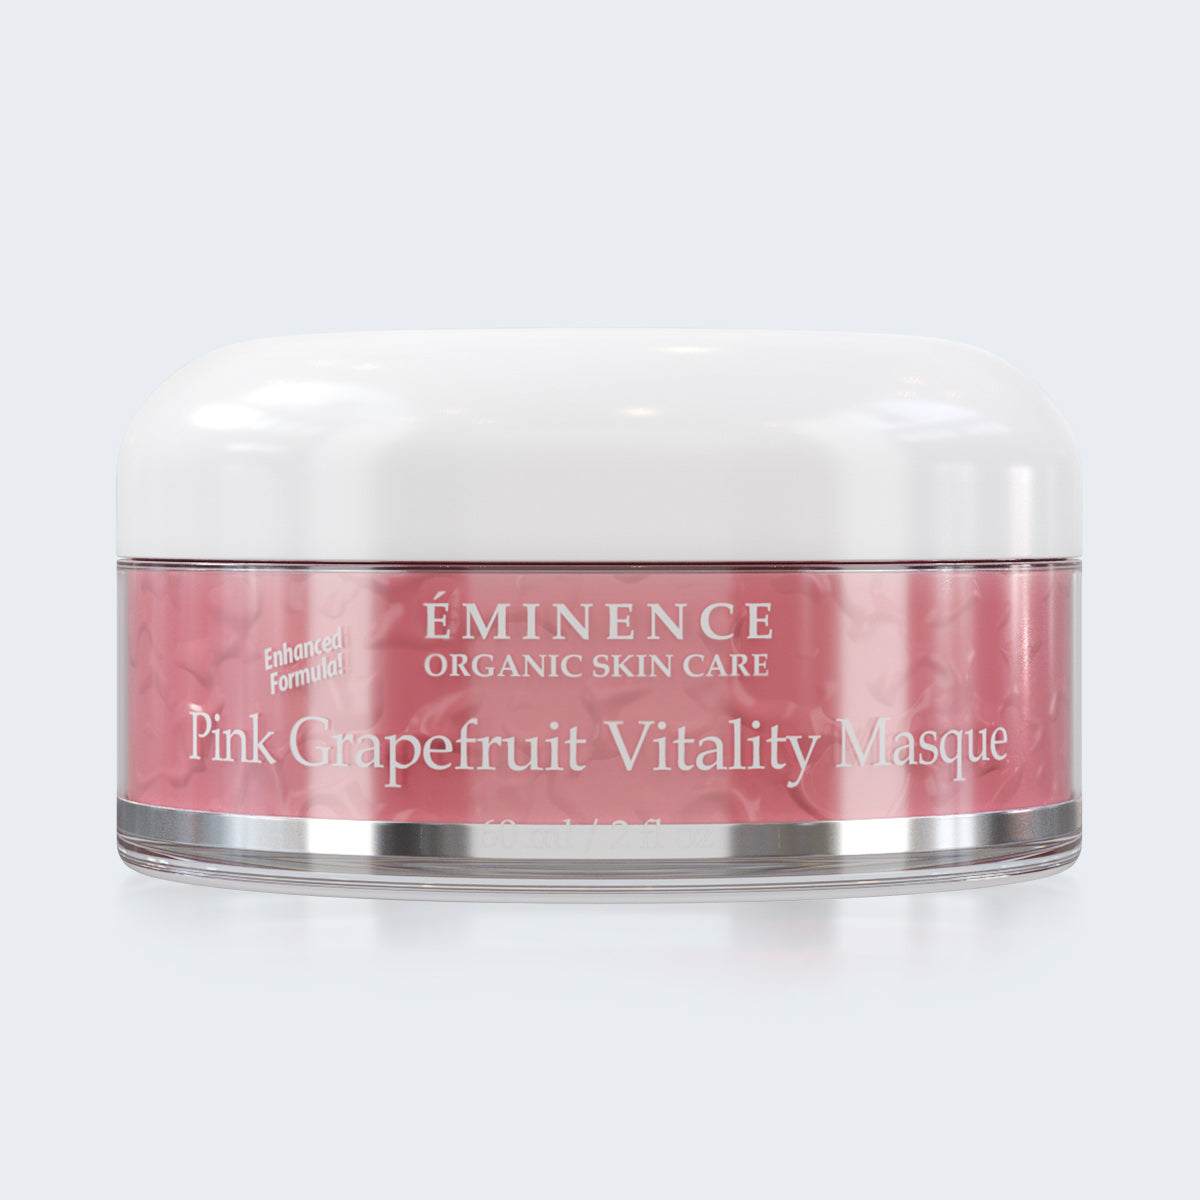 Eminence Organics Pink Grapefruit Vitality Masque